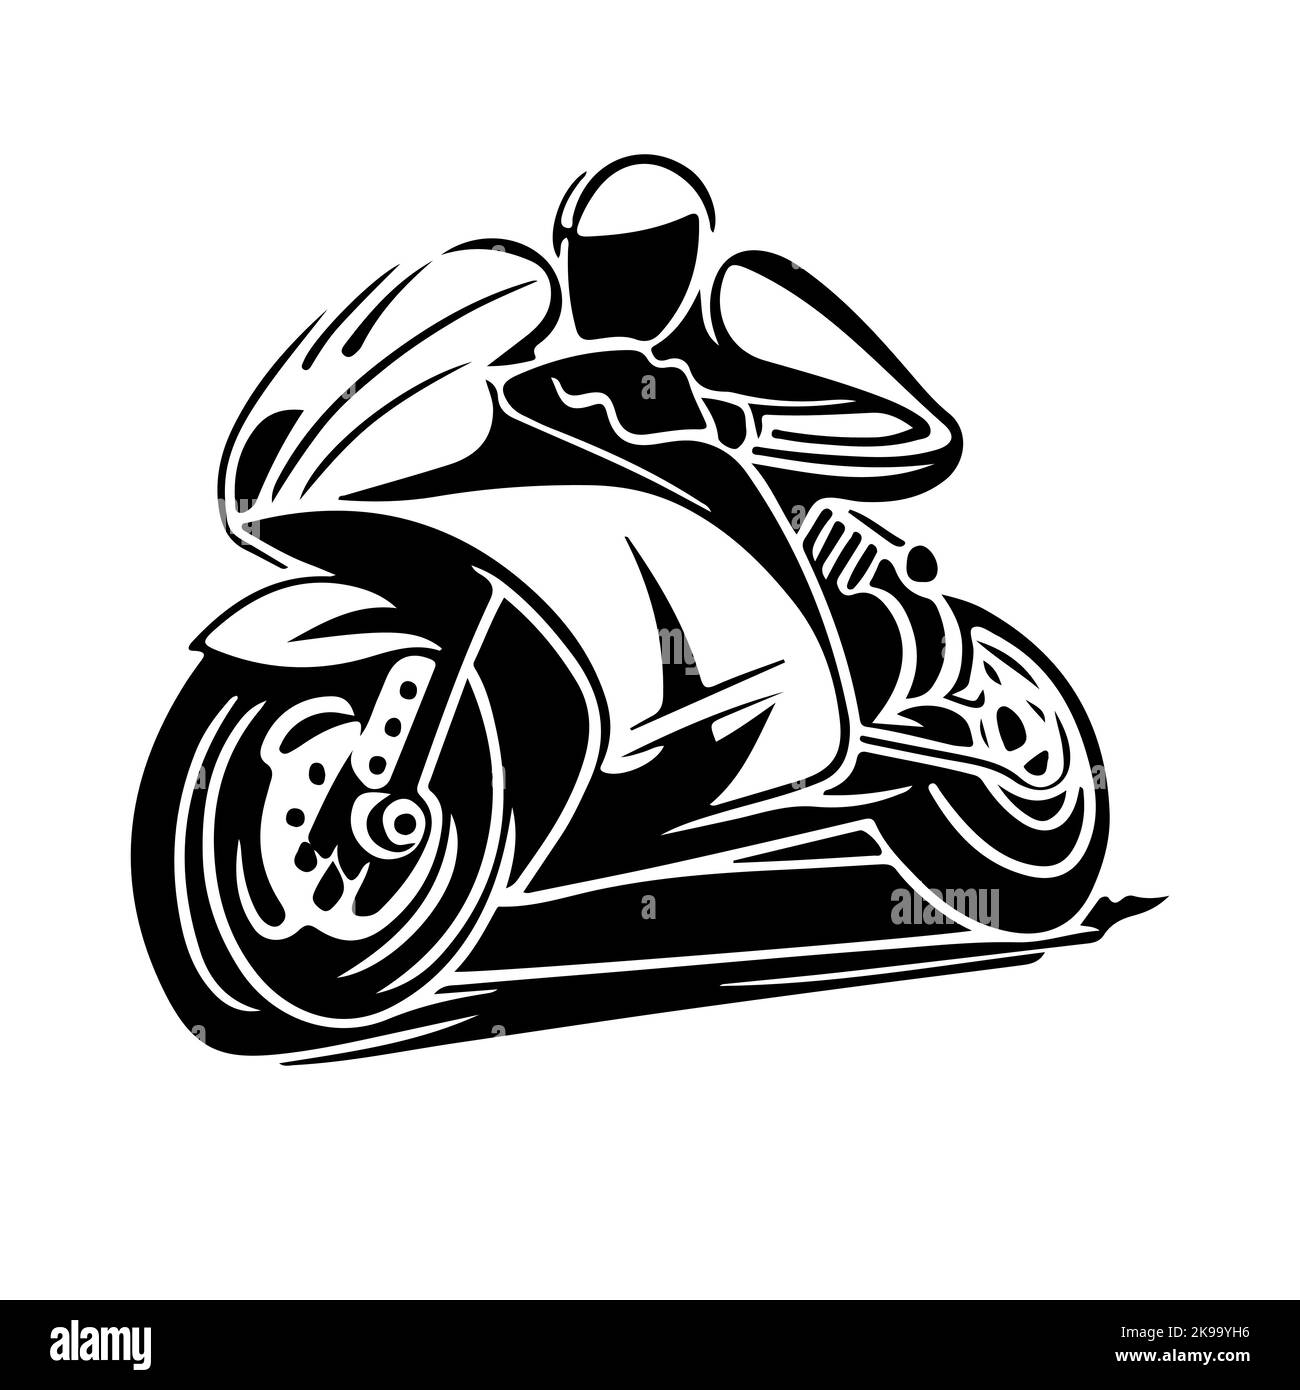 Motorcycle logo vector design. Great motorcycle logo. Motorcycle logo ...